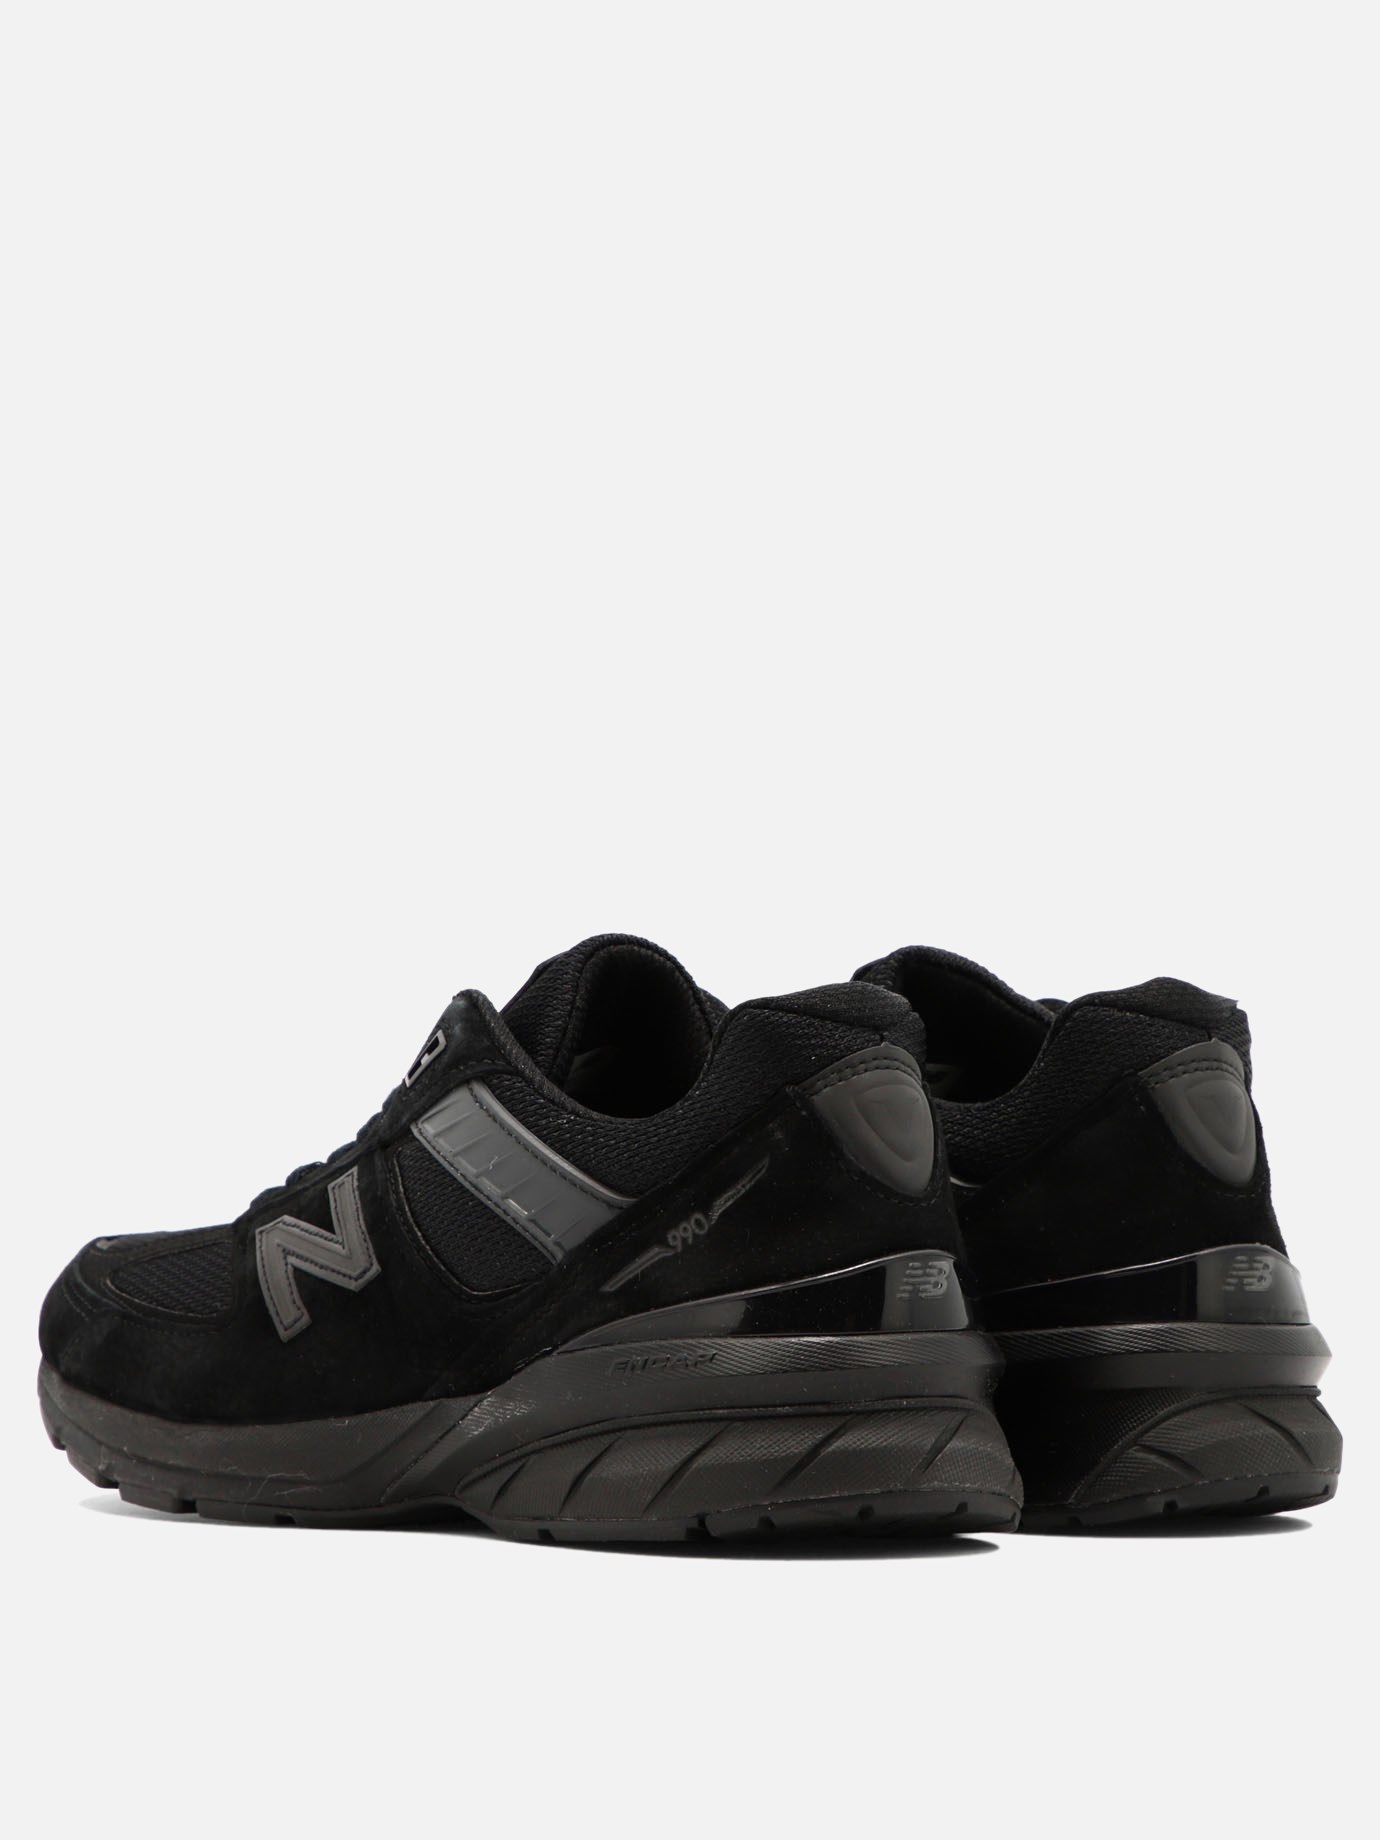 Sneaker  990V5  by New Balance